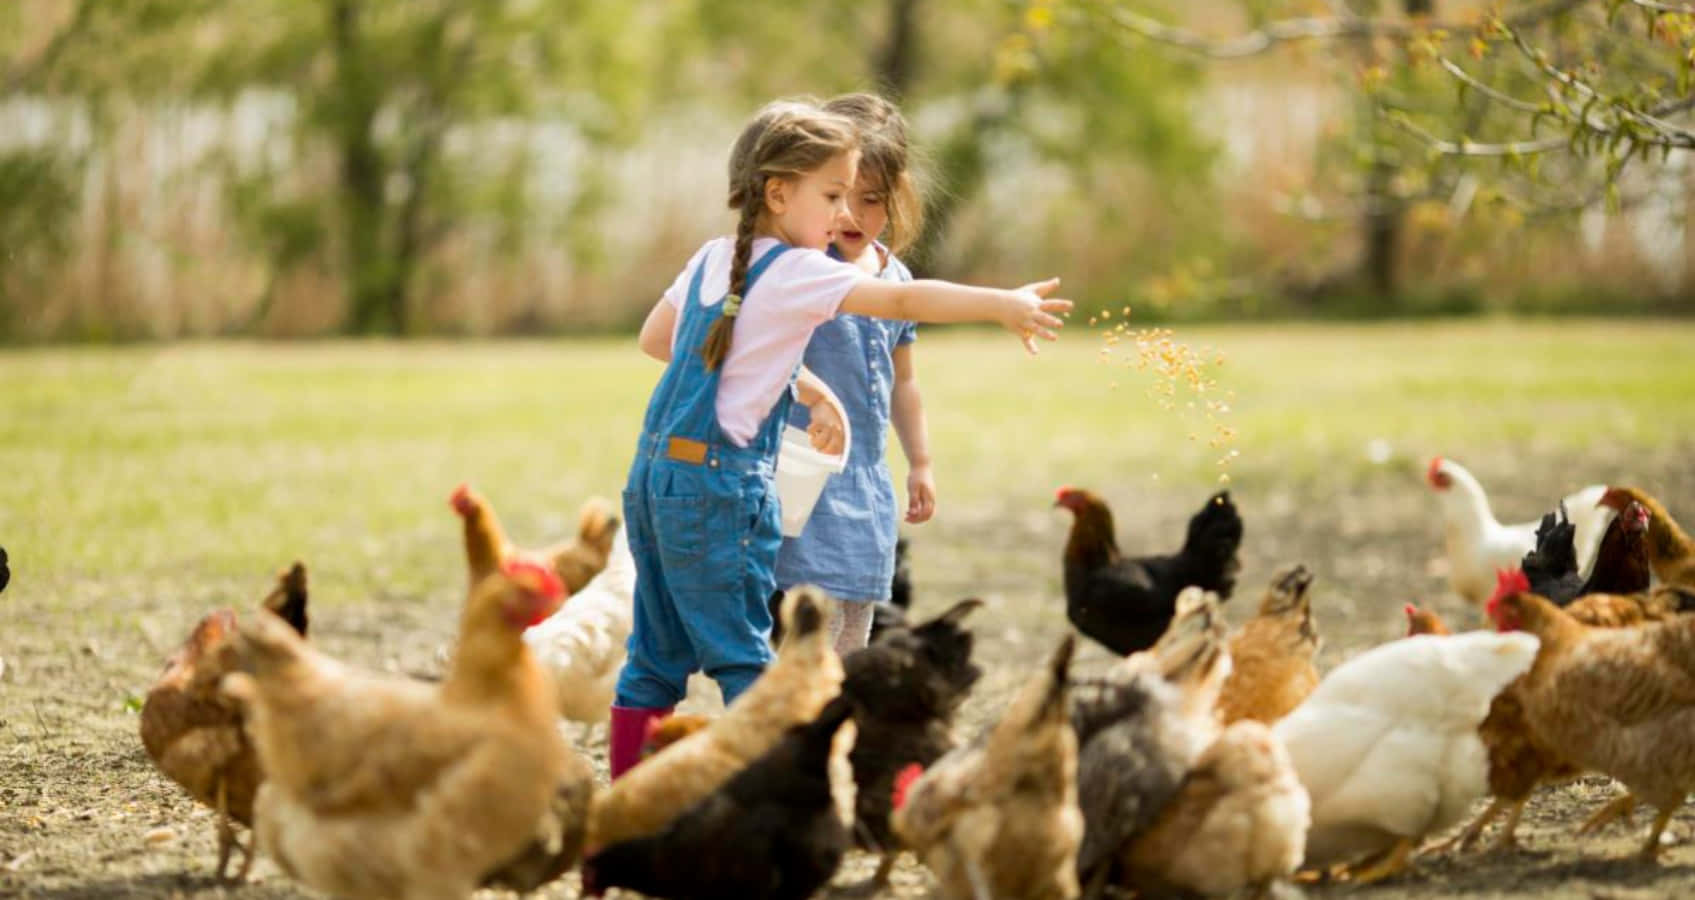 A Girl Feeding Chickens In A Field